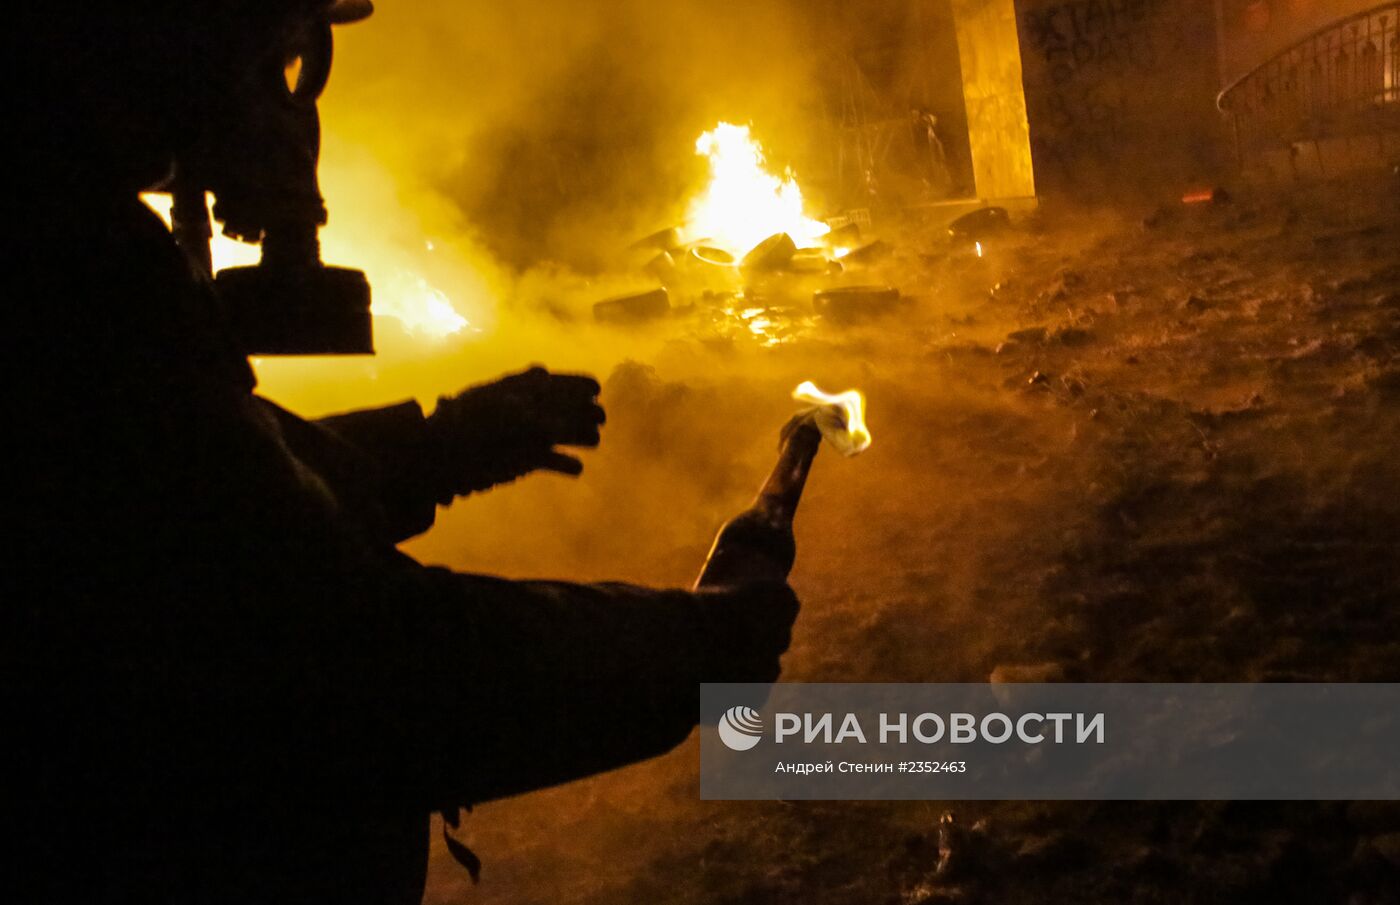 Столкновения протестующих с милицией в центре Киева